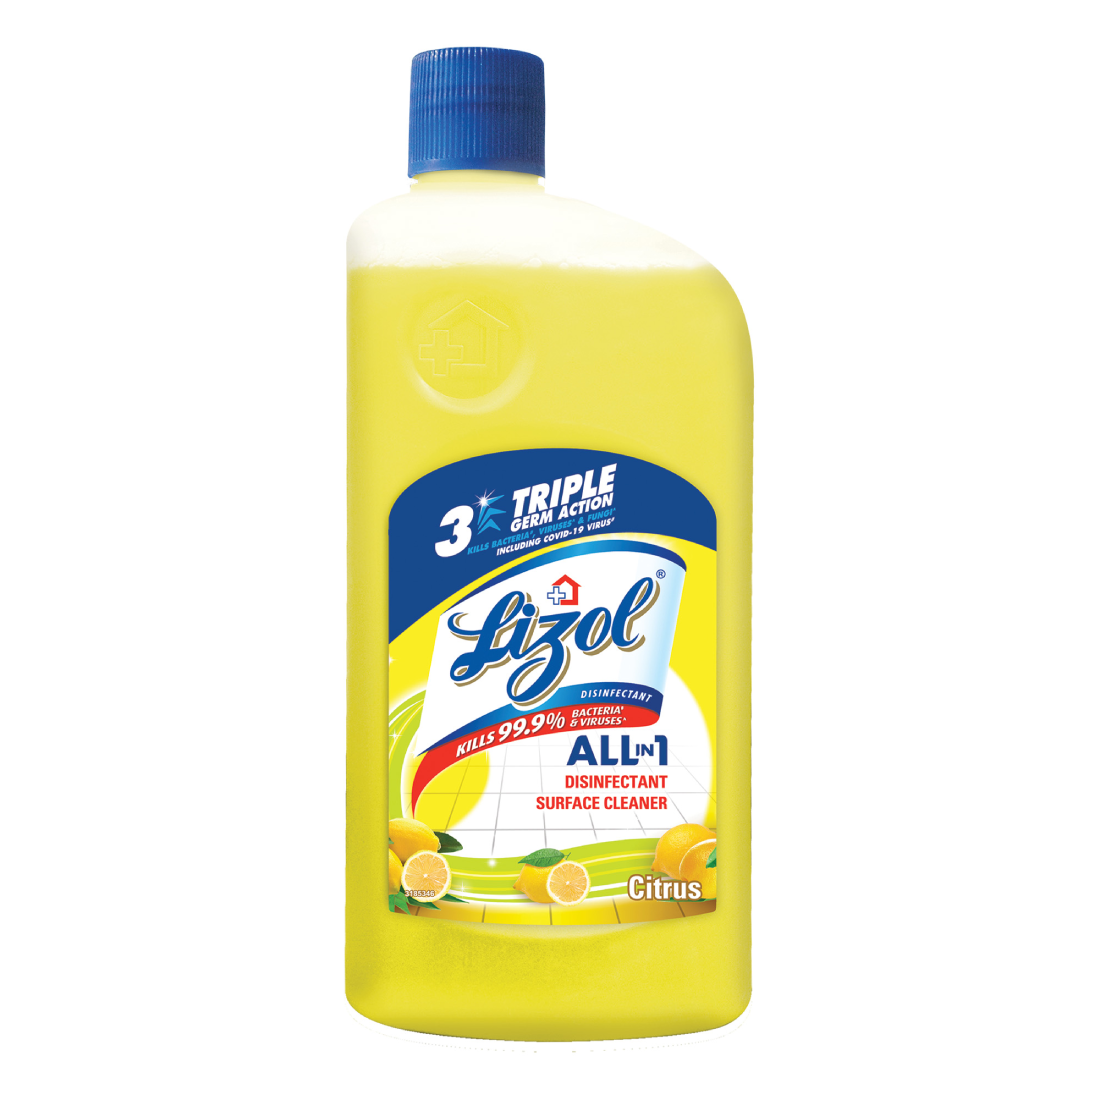 Lizol Disinfectant Surface Cleaner, Citrus, 975ml